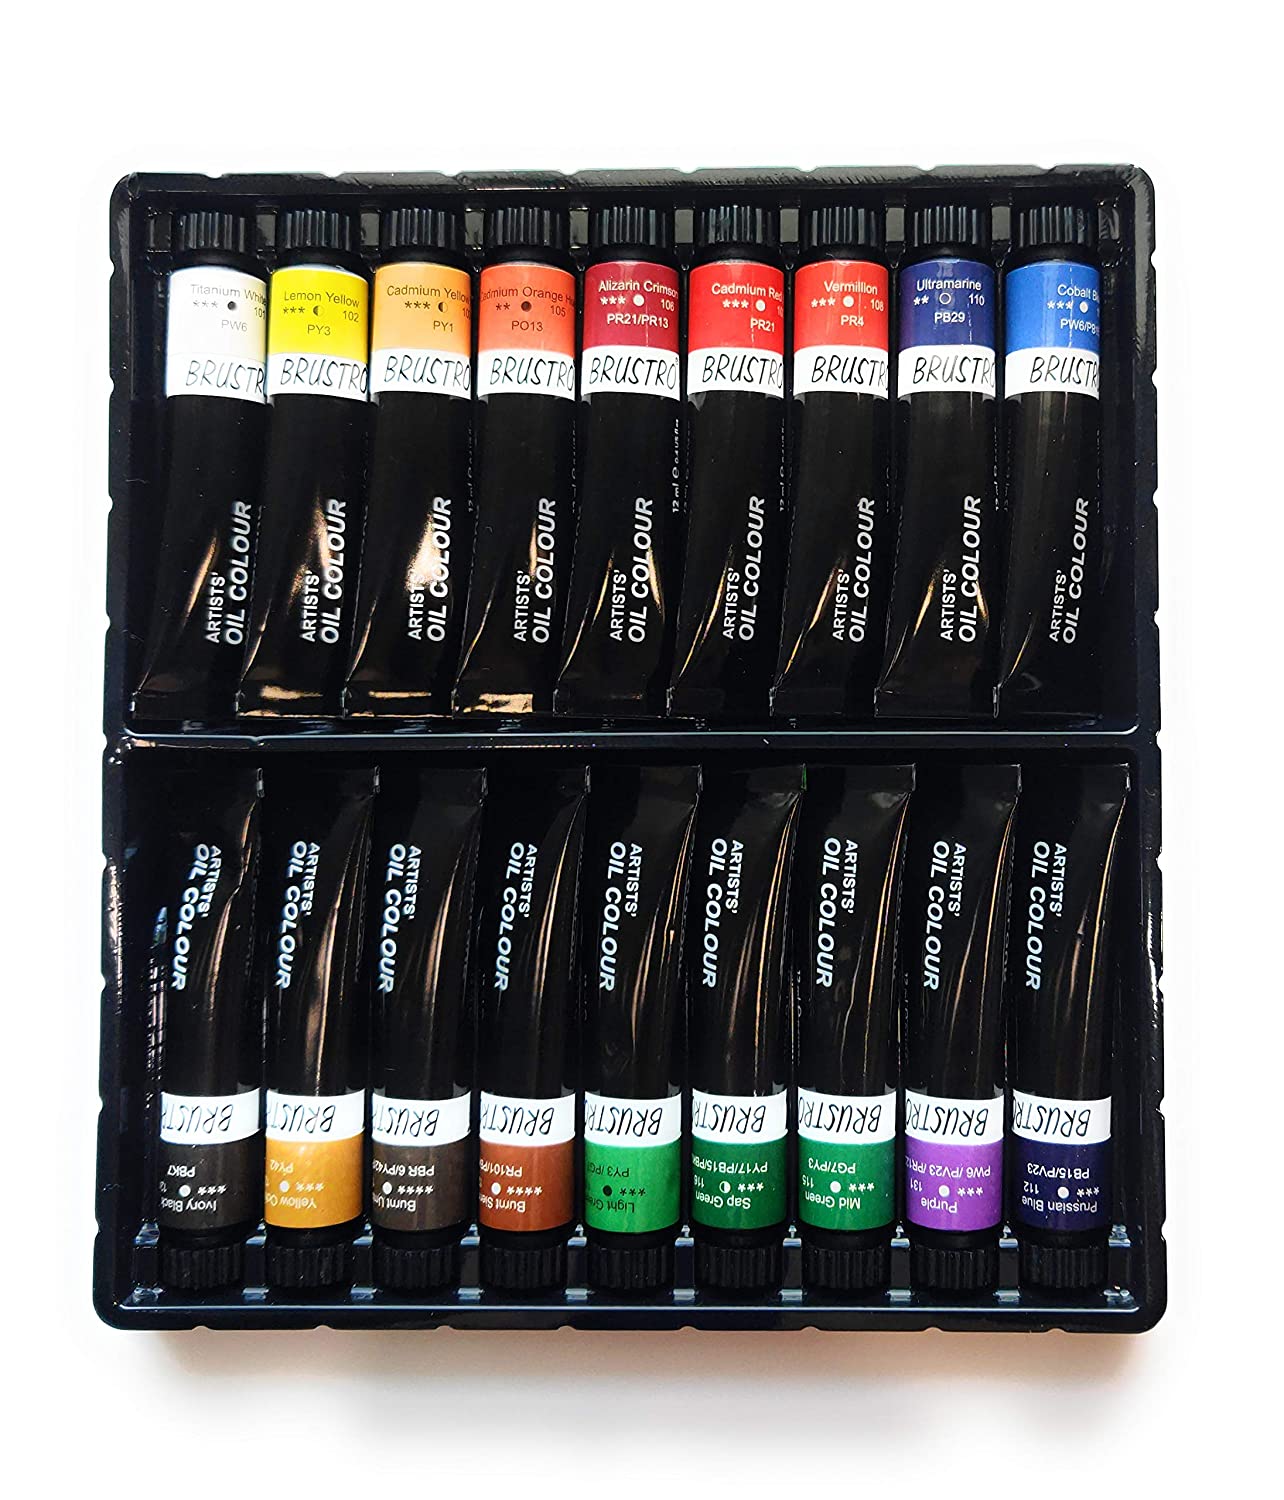 Brustro Artists ’ Oil Colour Set of 18